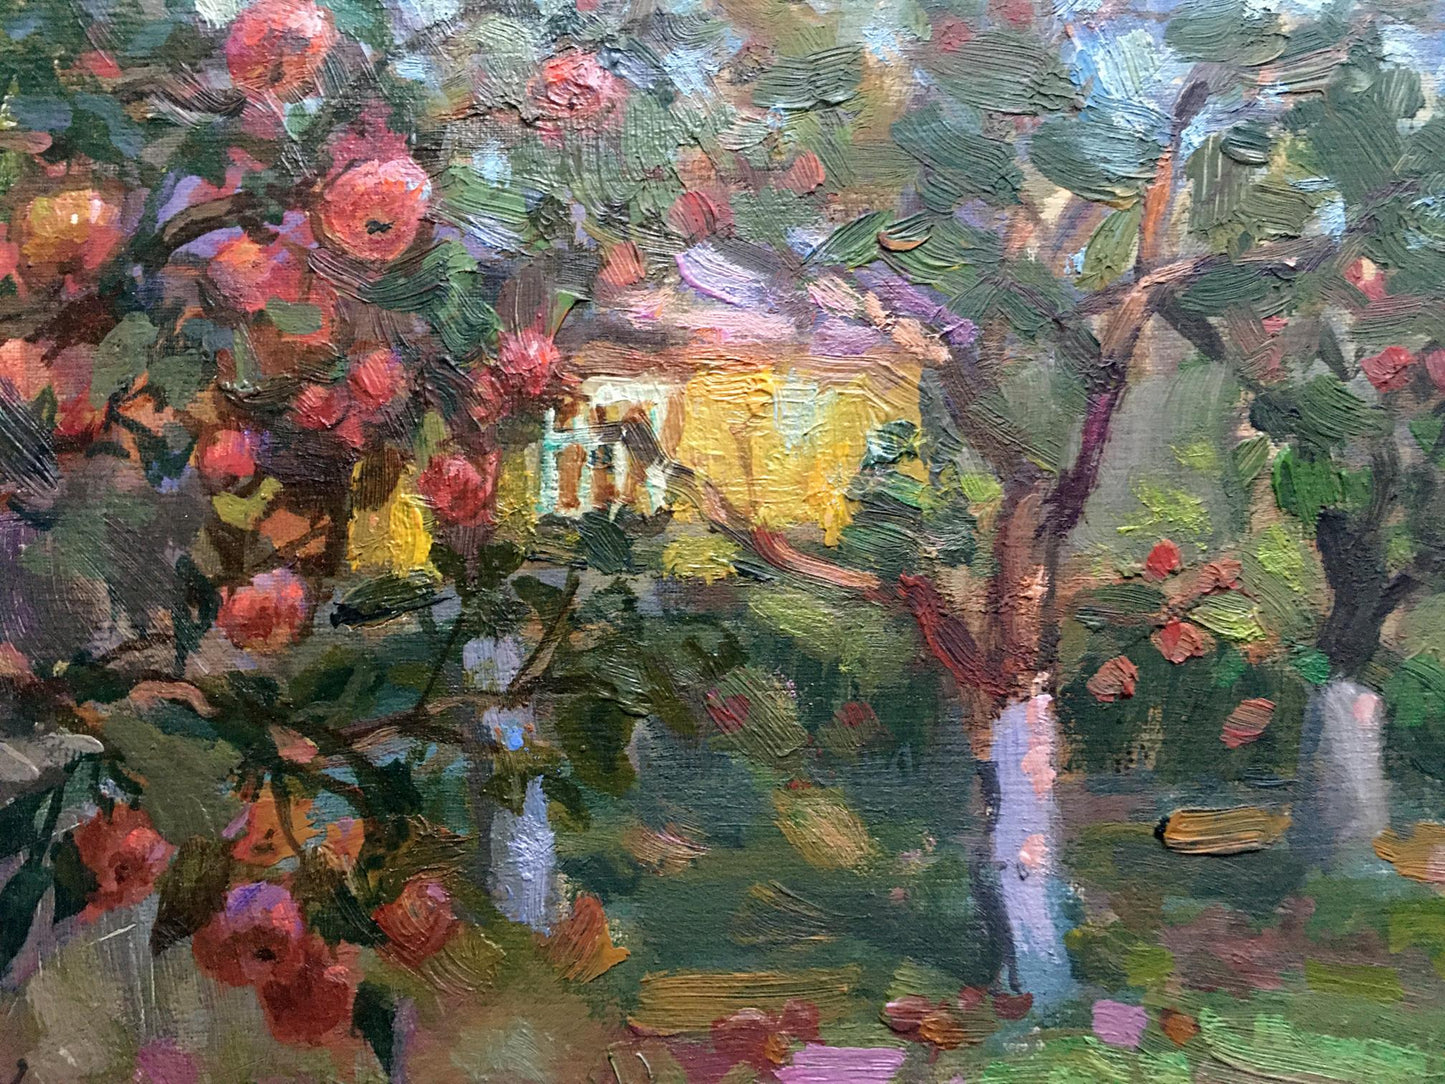 Oil painting First days of autumn Batrakov Vladimir Grigorievich